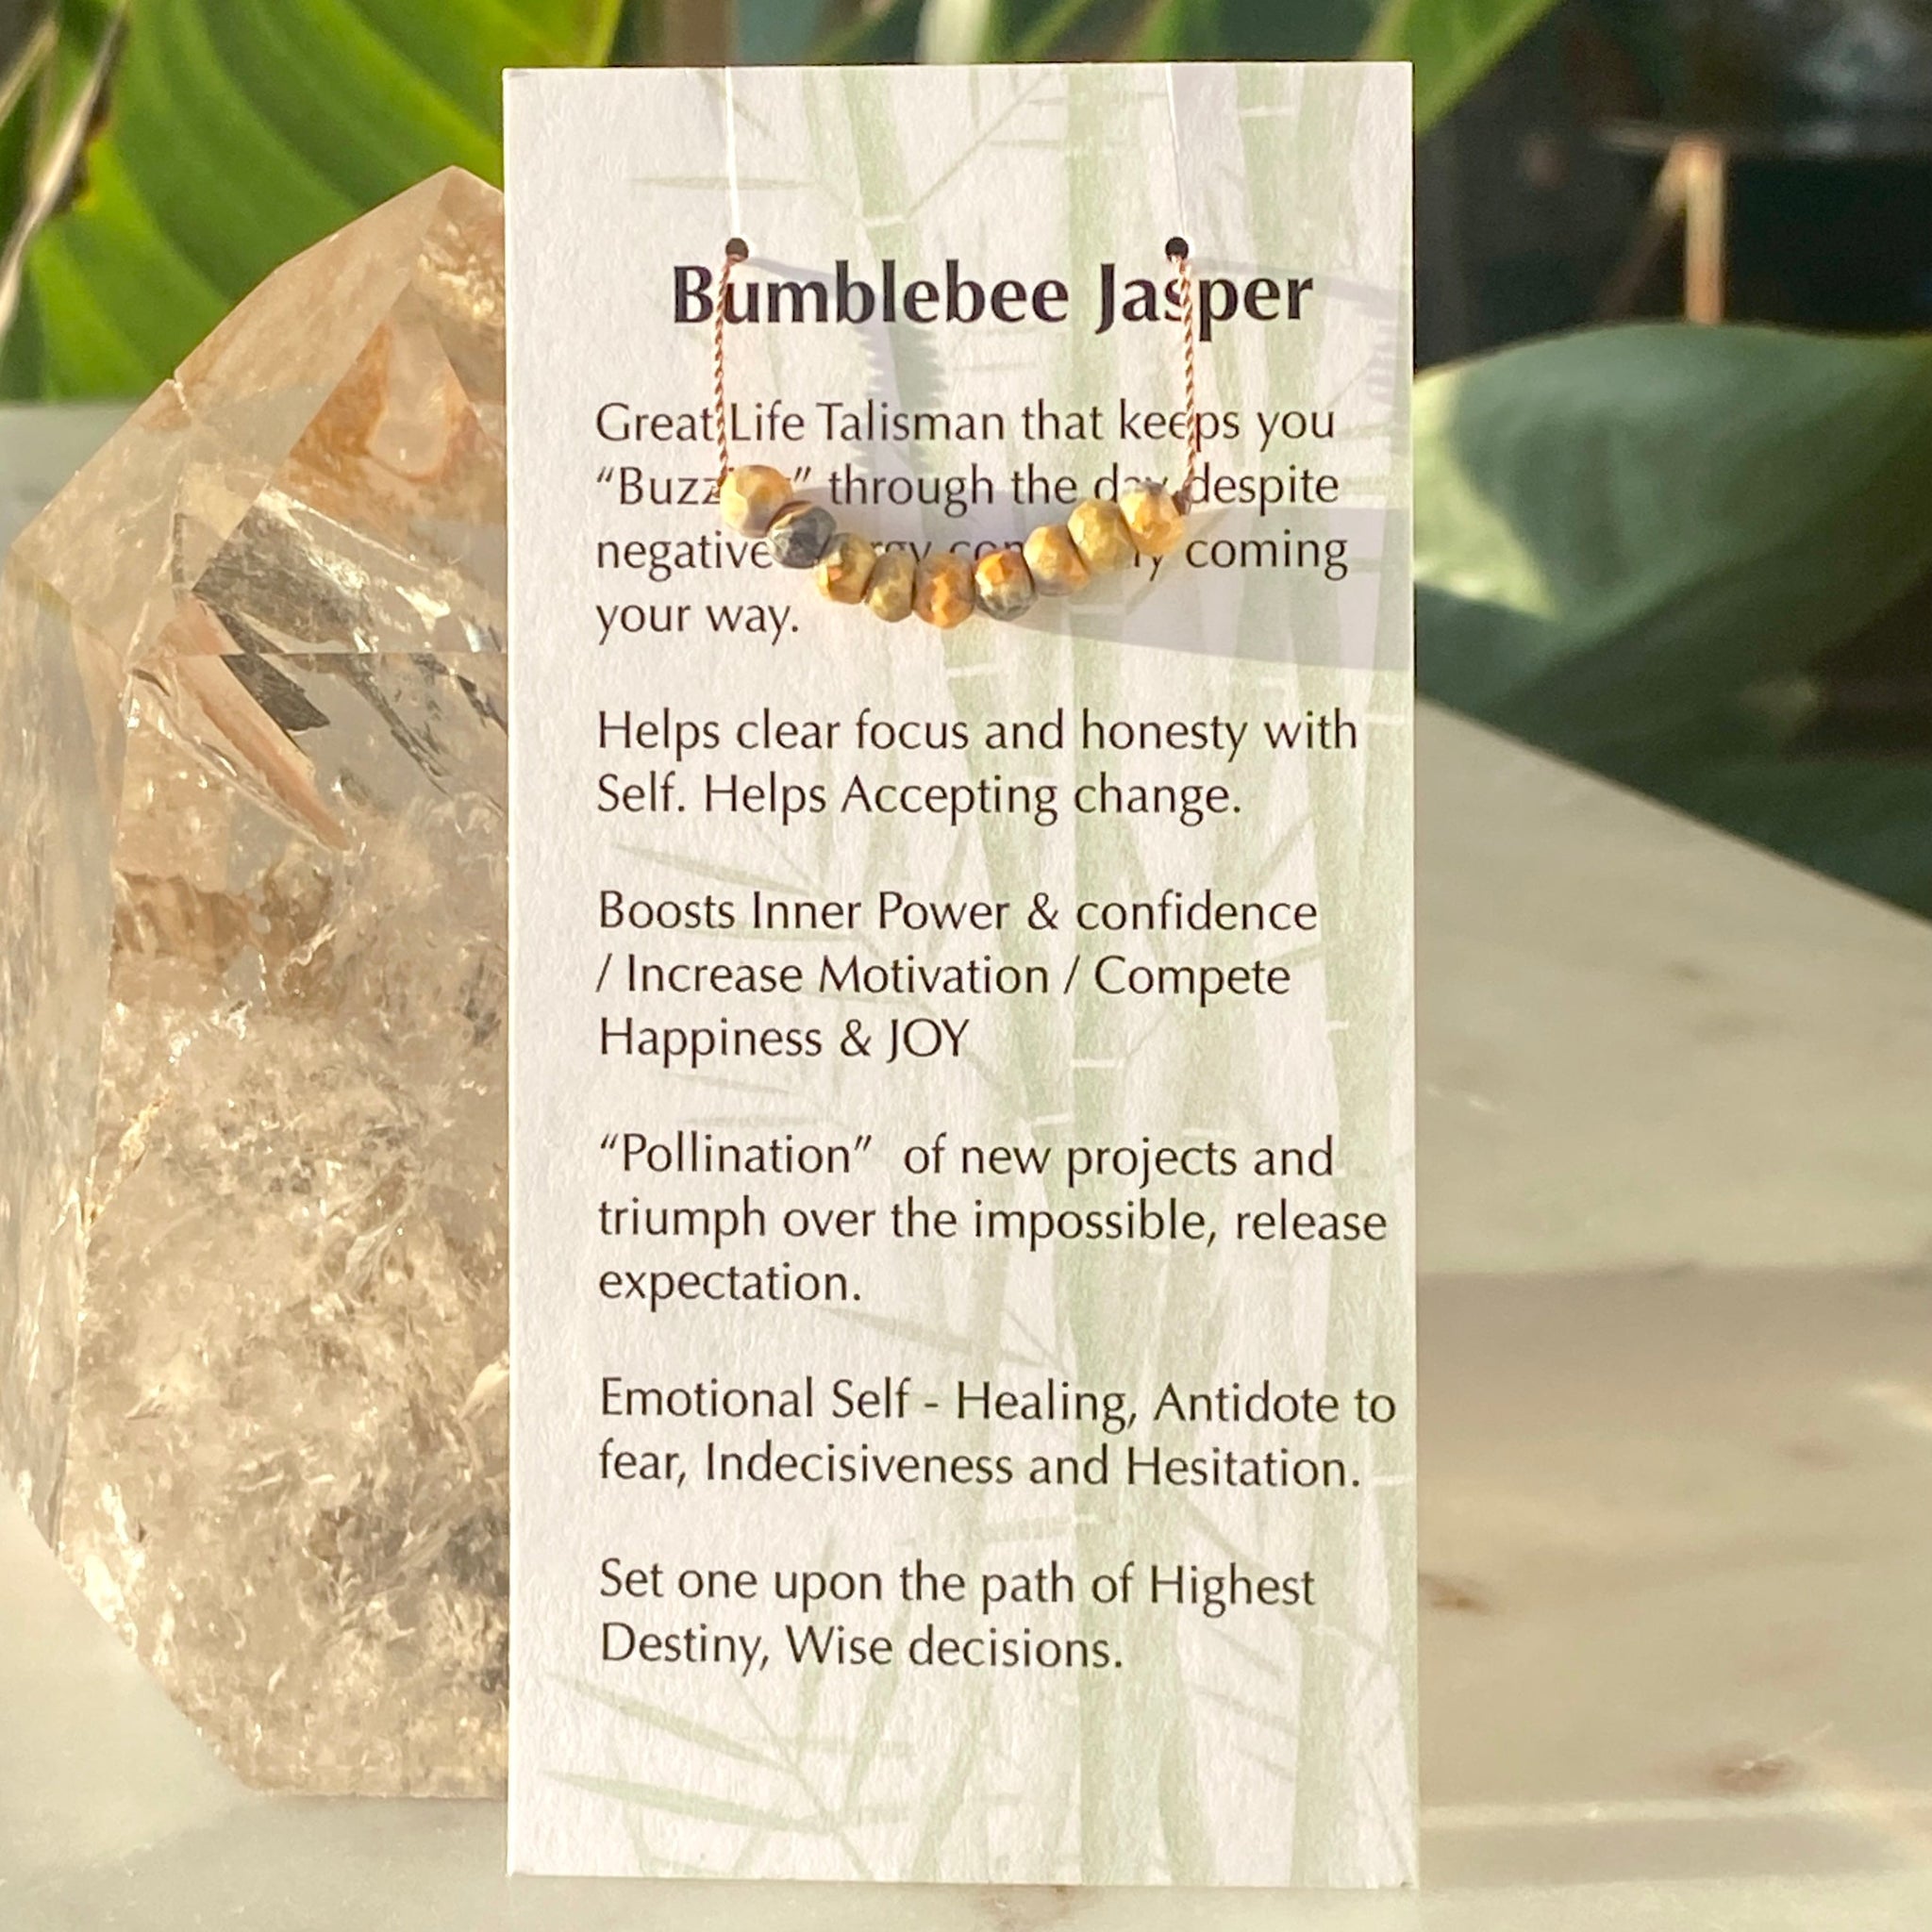 Bumblebee Jasper Special Edition